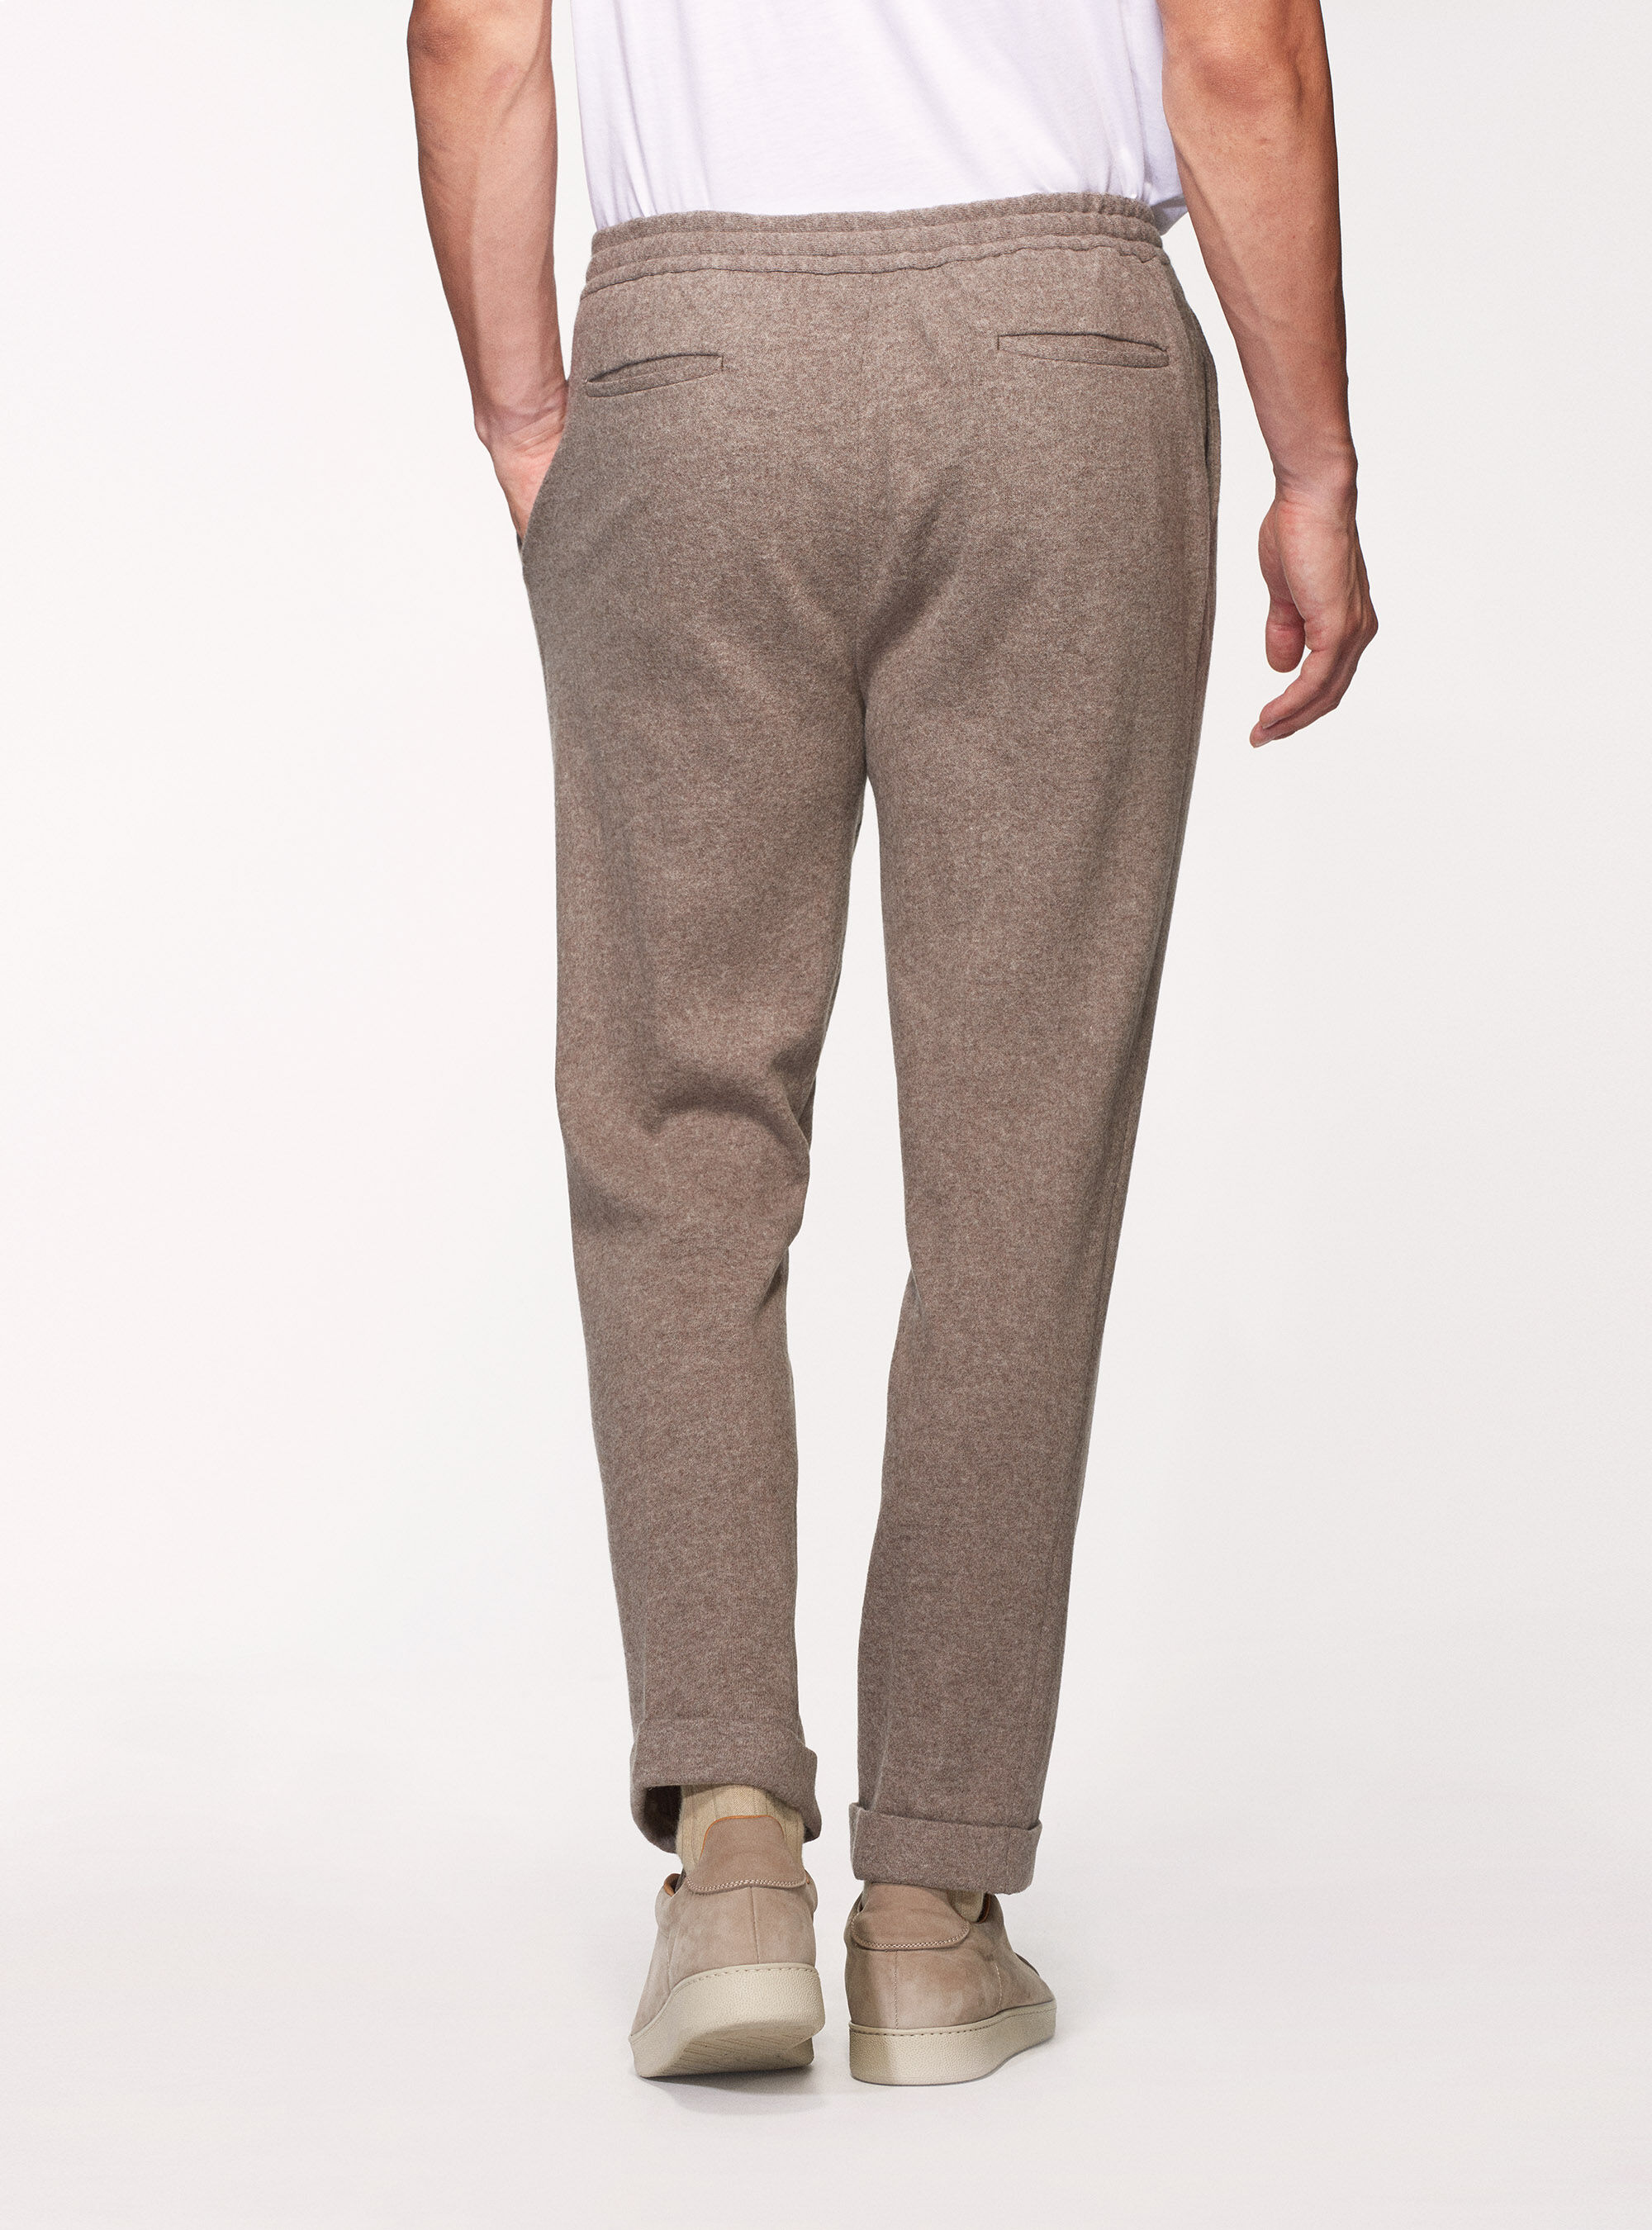 Pantaloni leisure fit in lana con coulisse Gutteridge Uomo Abbigliamento Pantaloni e jeans Pantaloni Pantaloni eleganti 